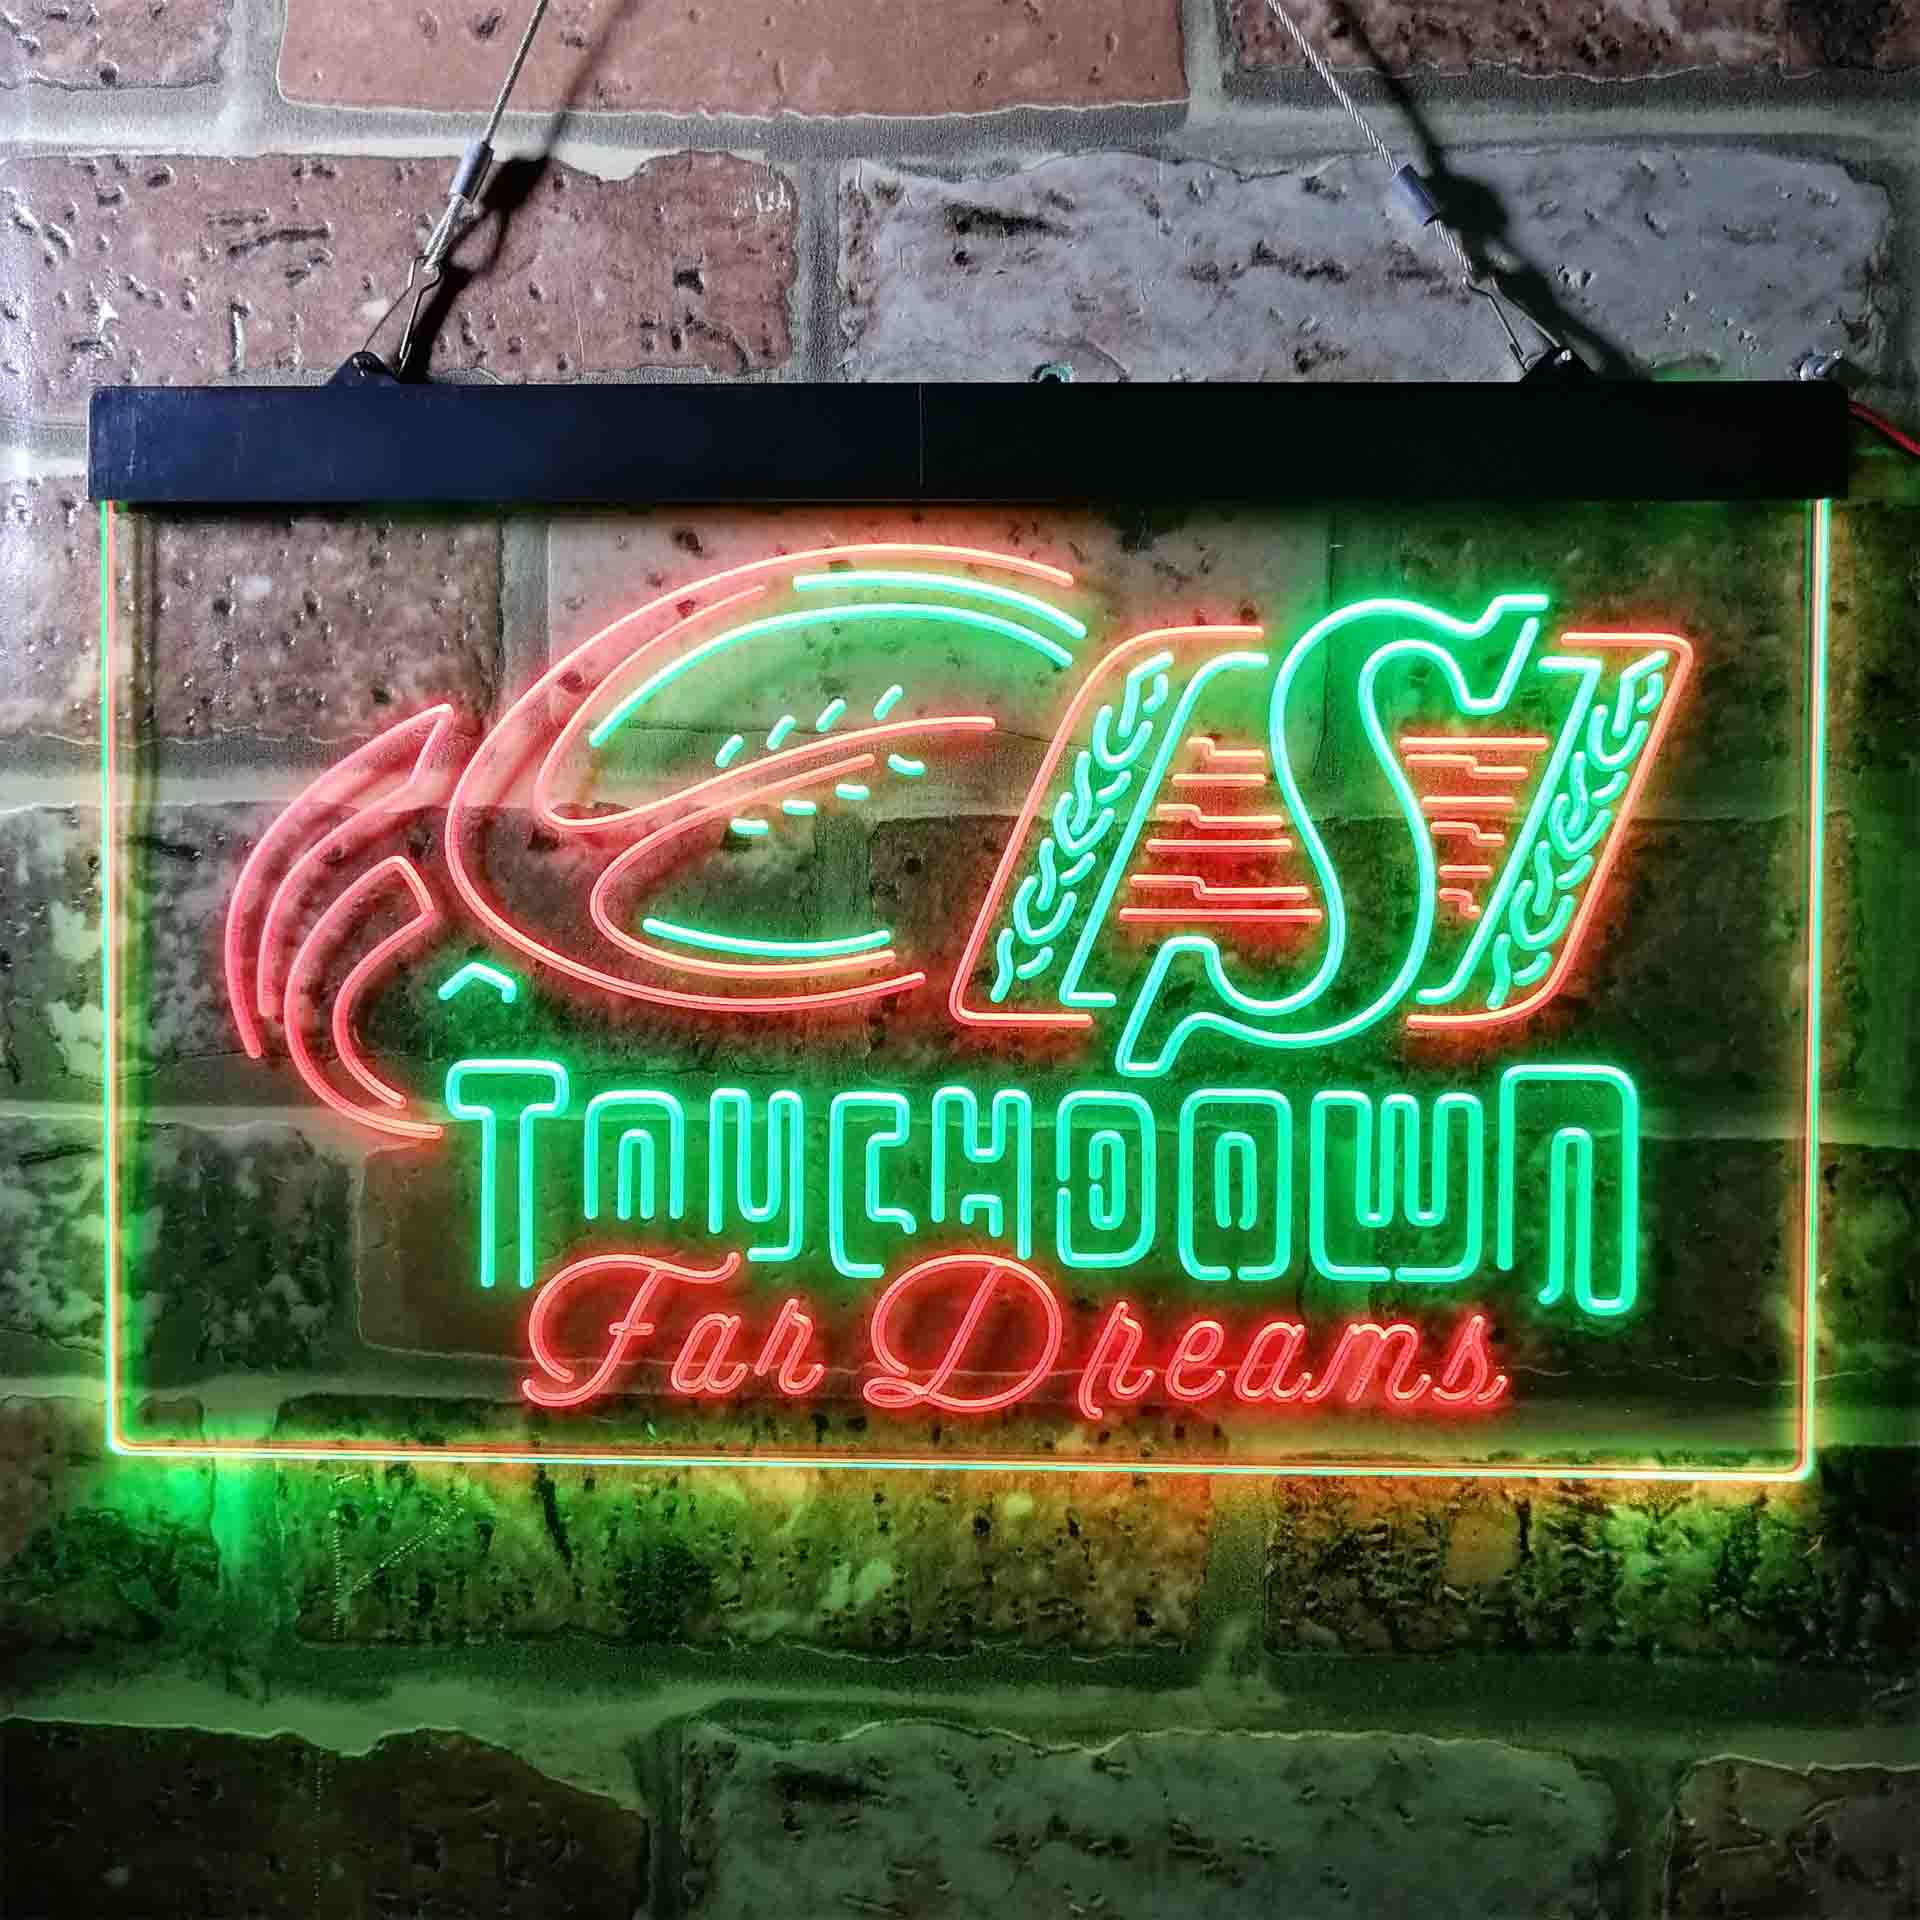 saskatchewan roughriders LED Neon Sign